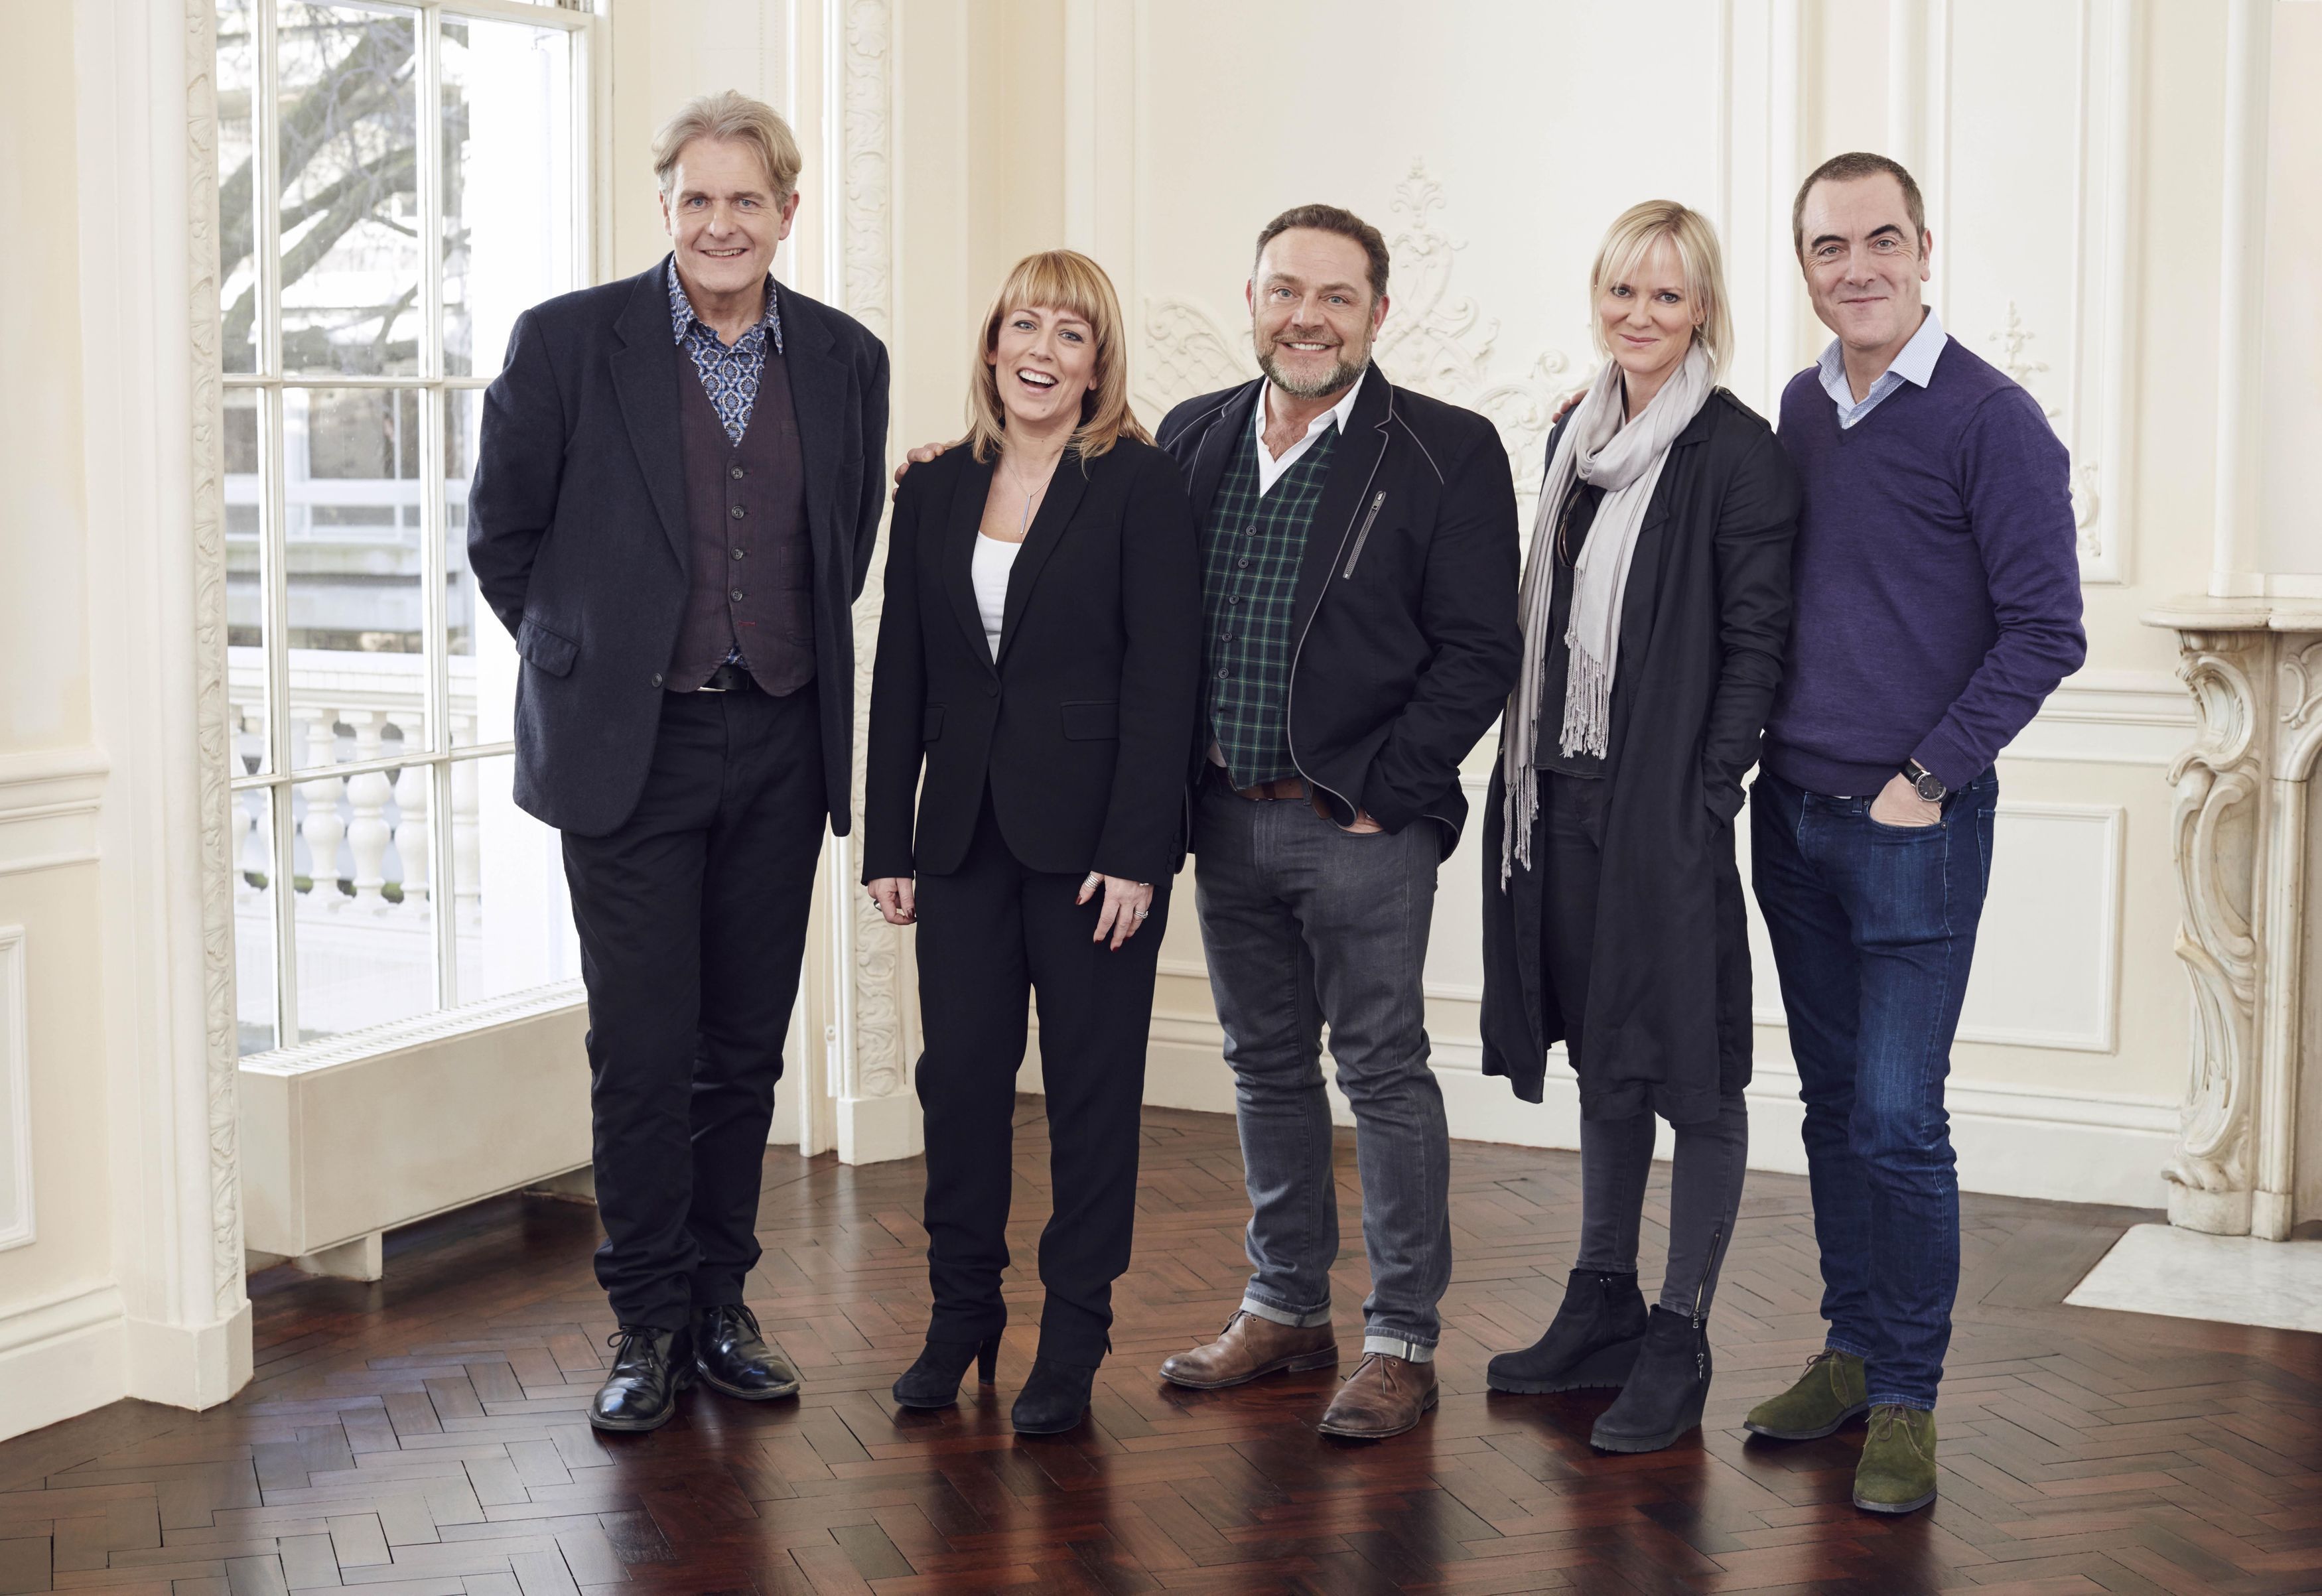 Cold Feet cast members (from left) Robert Bathurst, Fay Ripley, John Thomson, Hermione Norris and James Nesbitt (ITV)